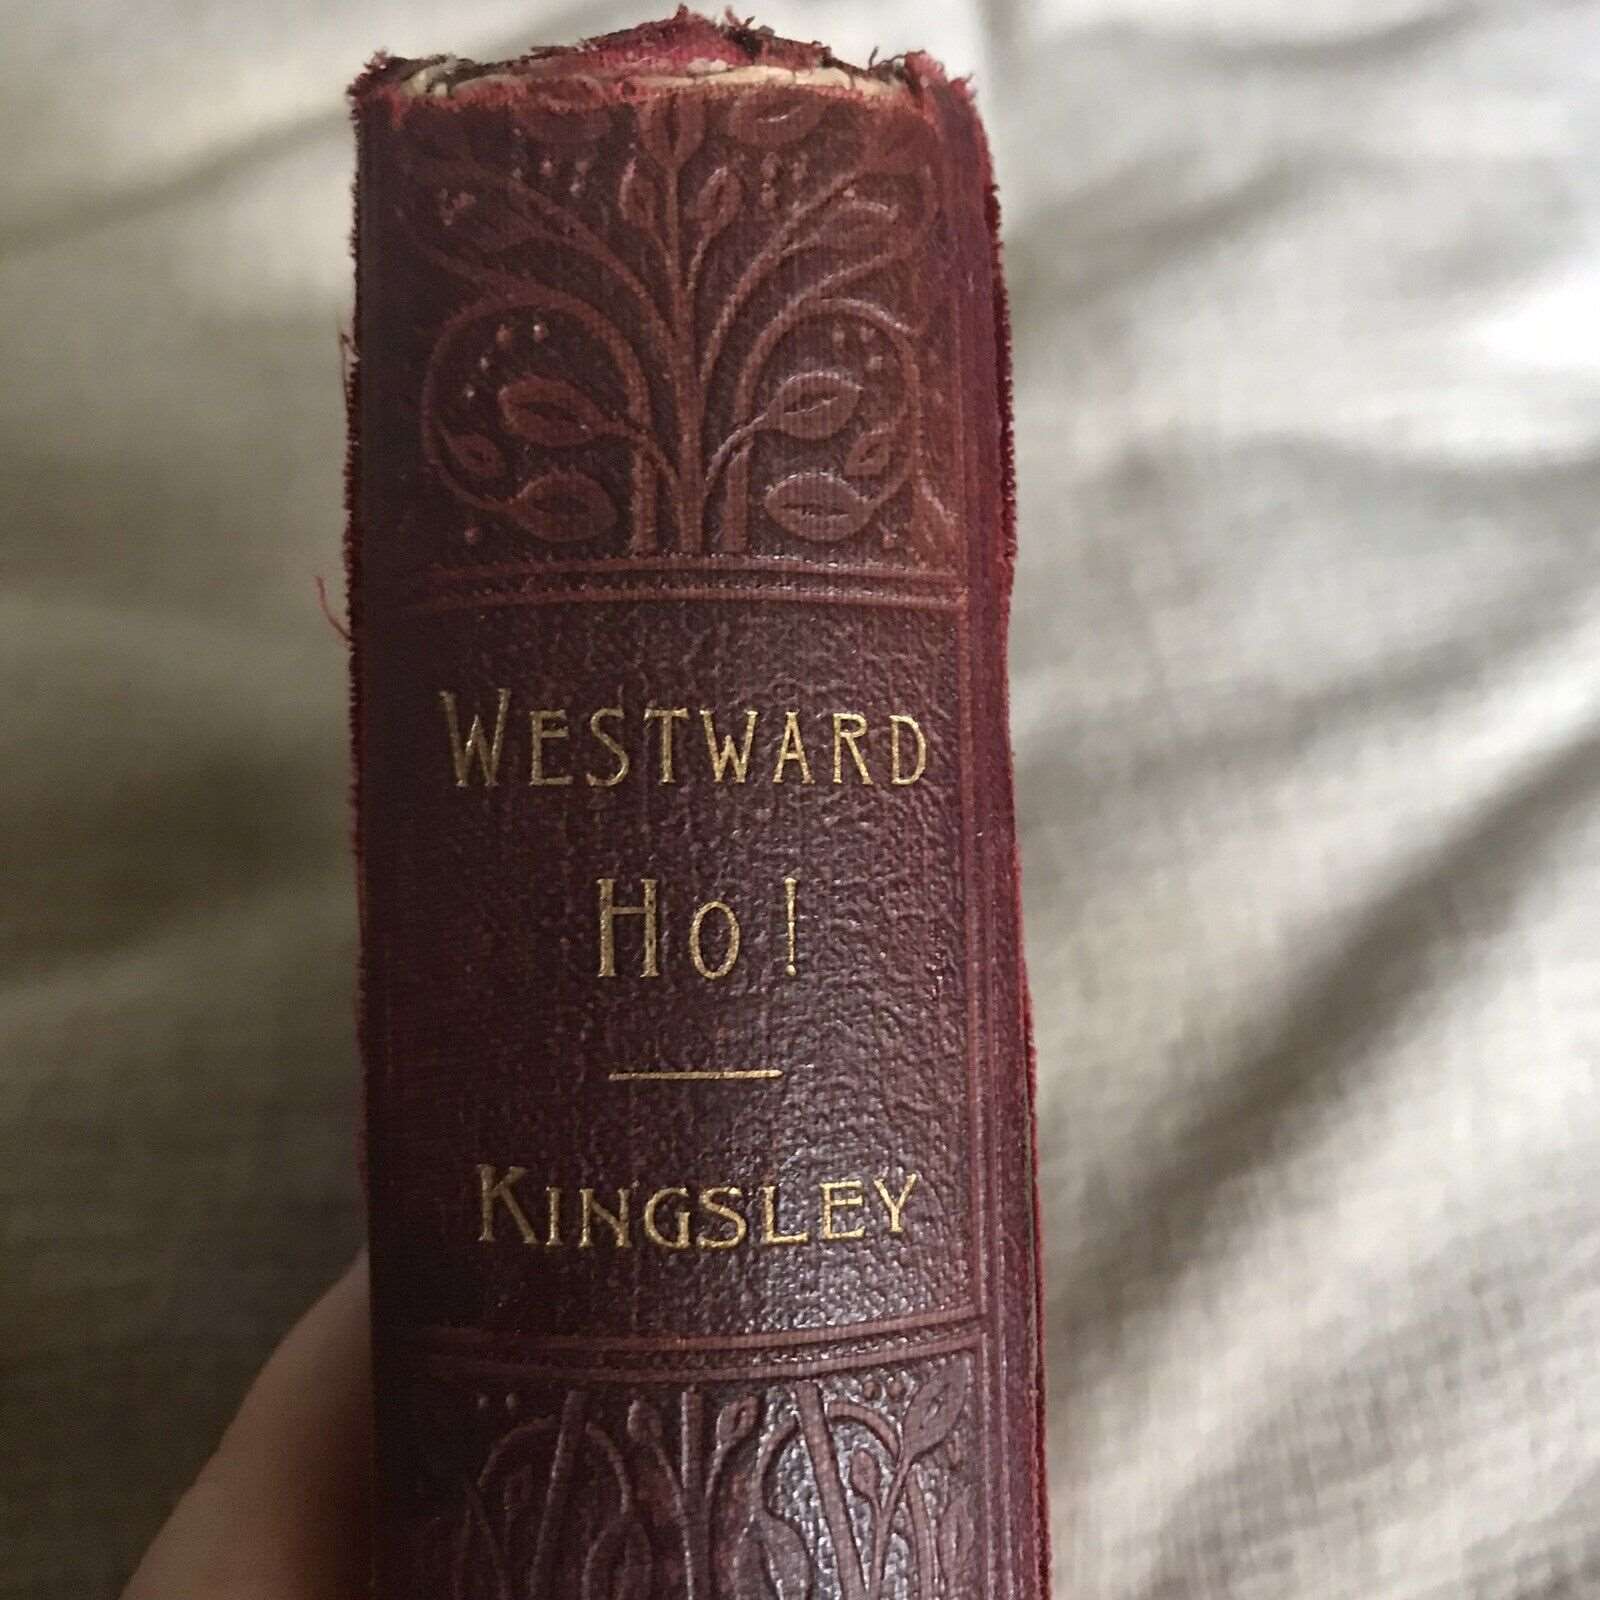 1902 Westward Ho! - Charles Kingsley (The Walter Scott Publishing) Honeyburn Books (UK)